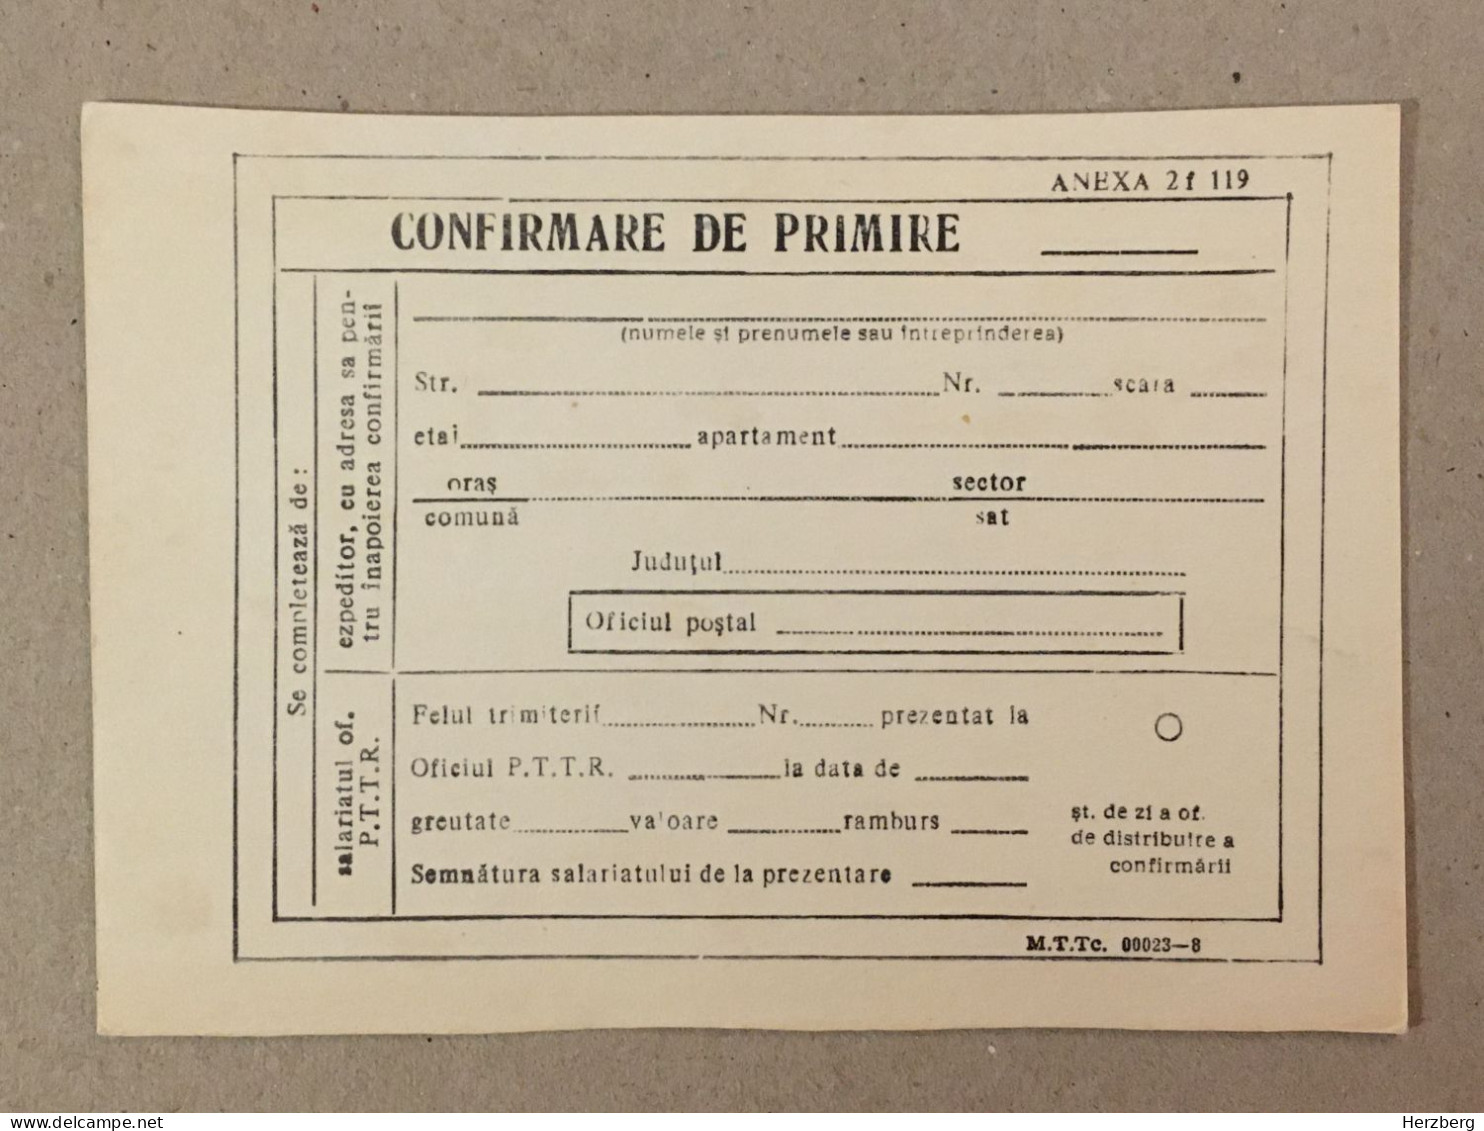 Romania Rumanien Roumanie - 1975 Confirmare De Primire / Postal Receipt Confirmation - Unused - Covers & Documents